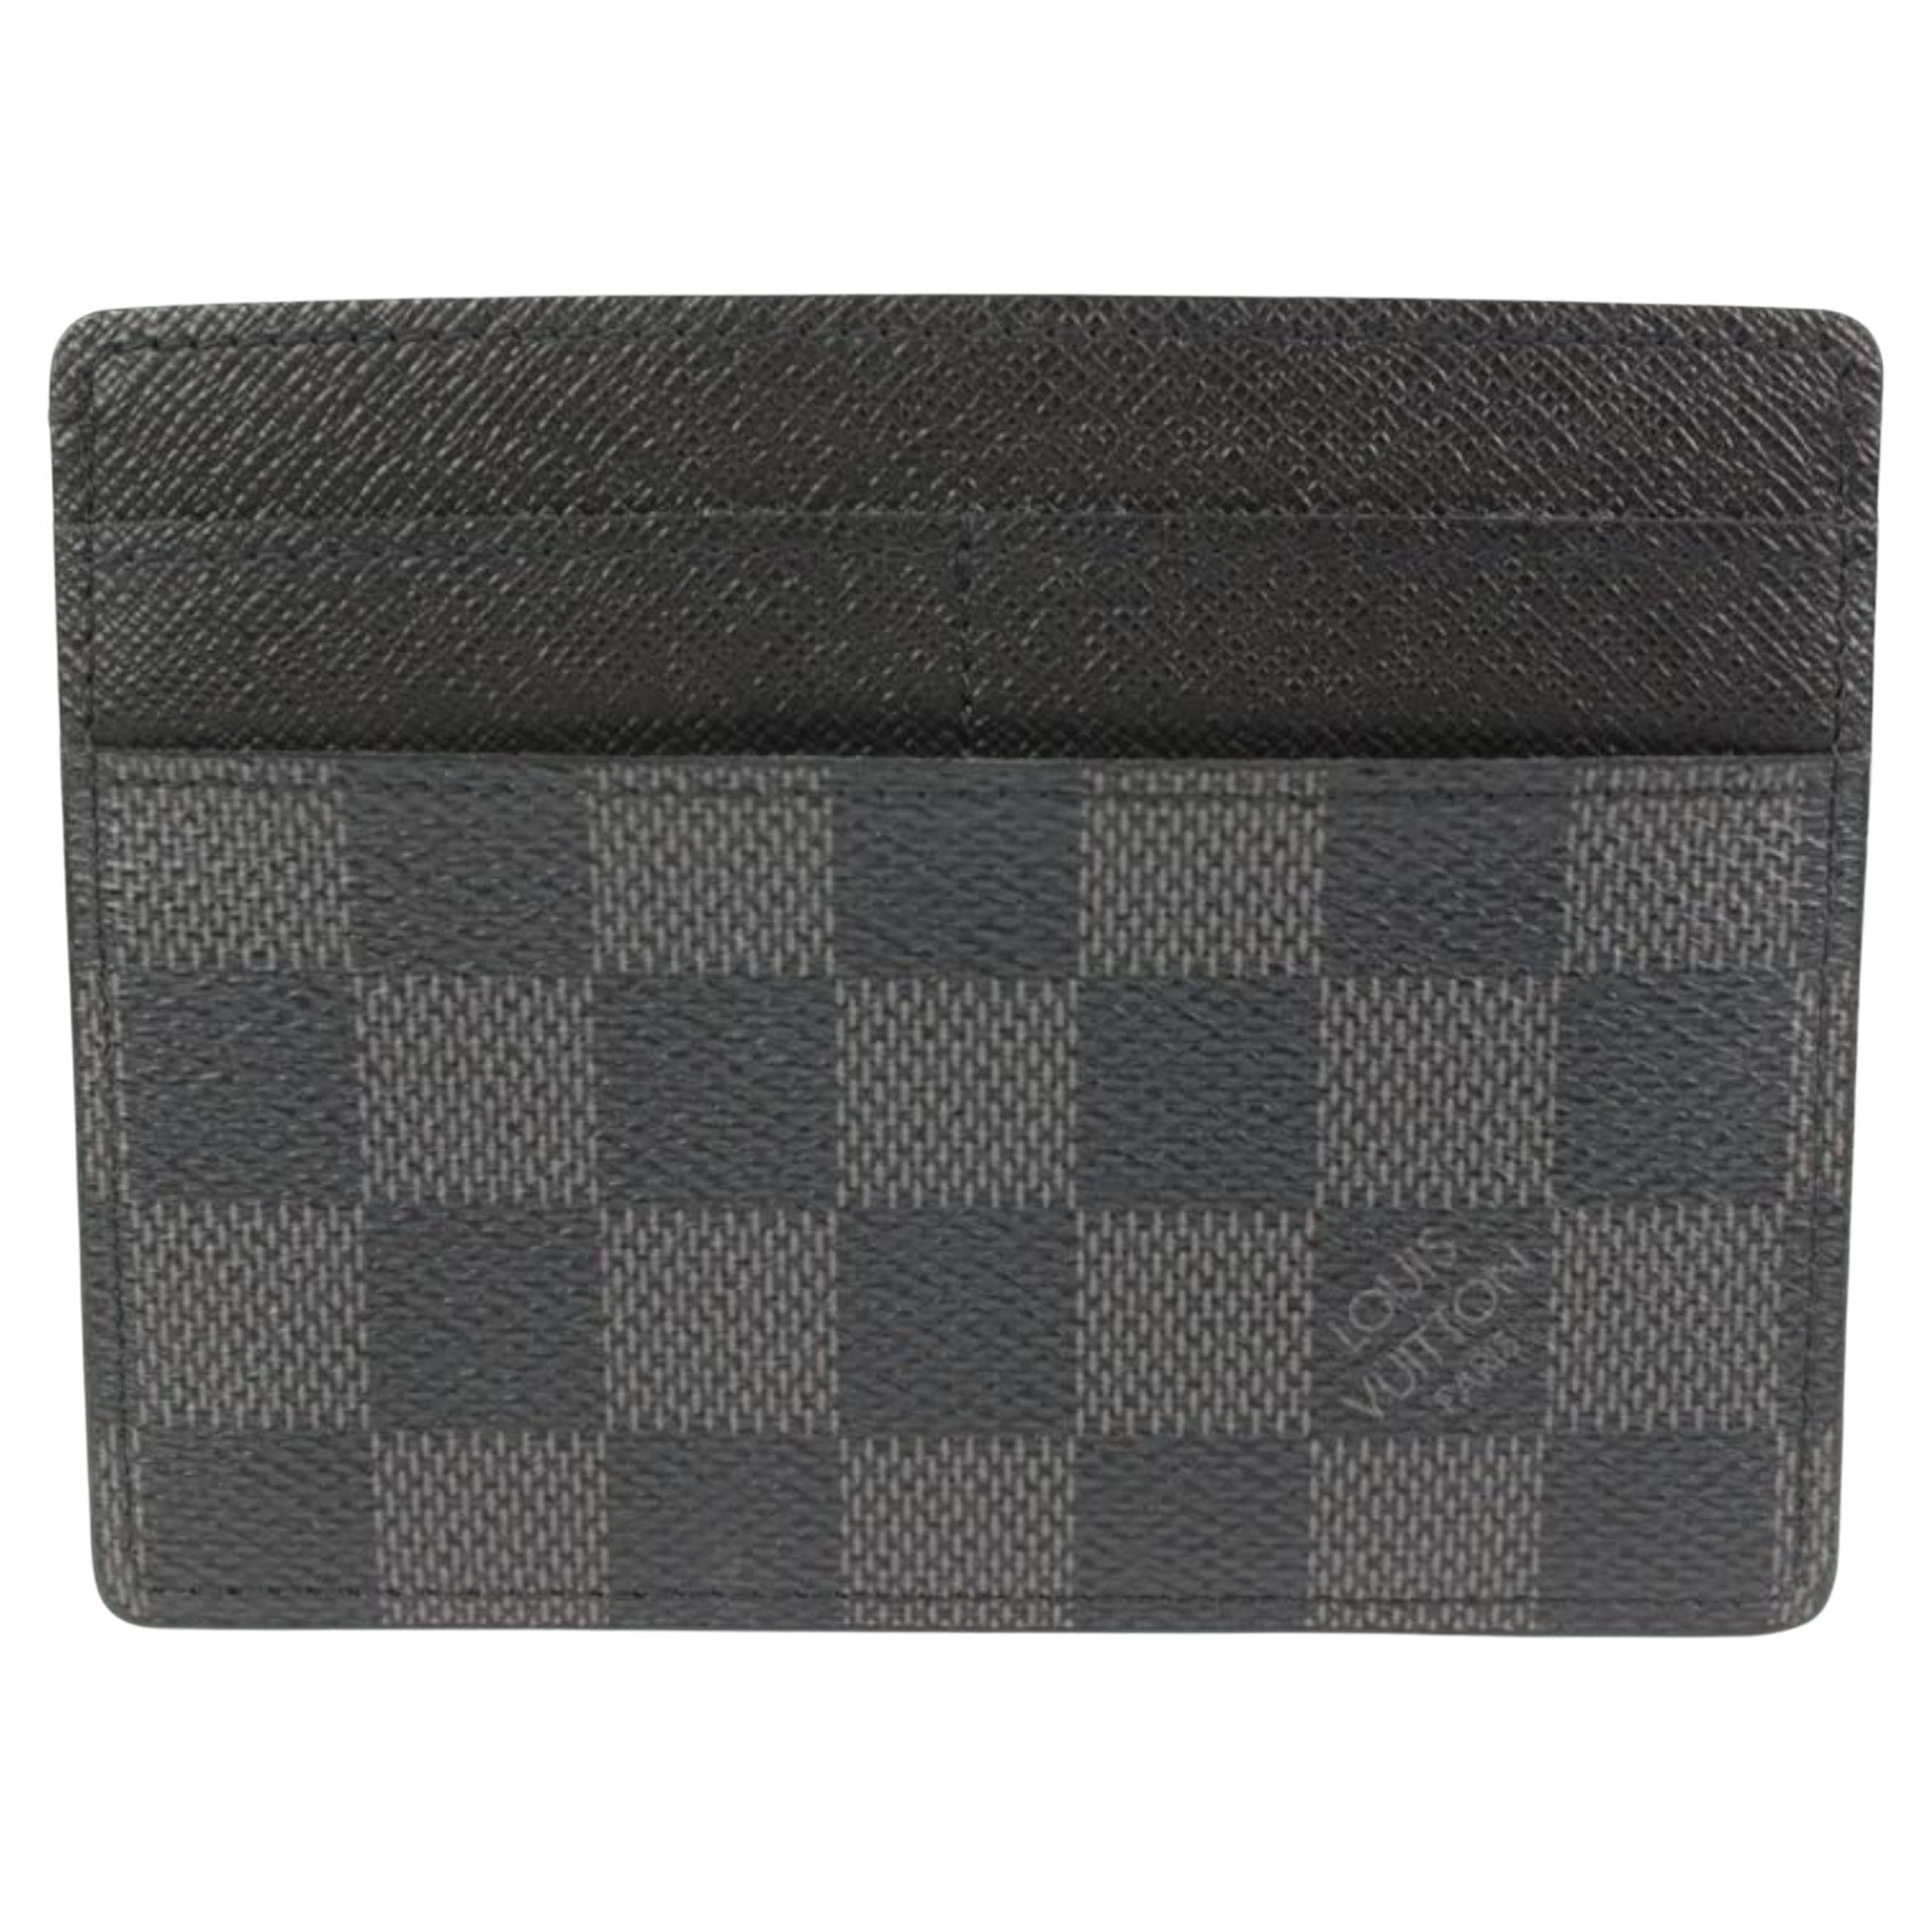 Louis Vuitton Damier Graphite Large Card Holder Wallet Case Insert 1LVA726